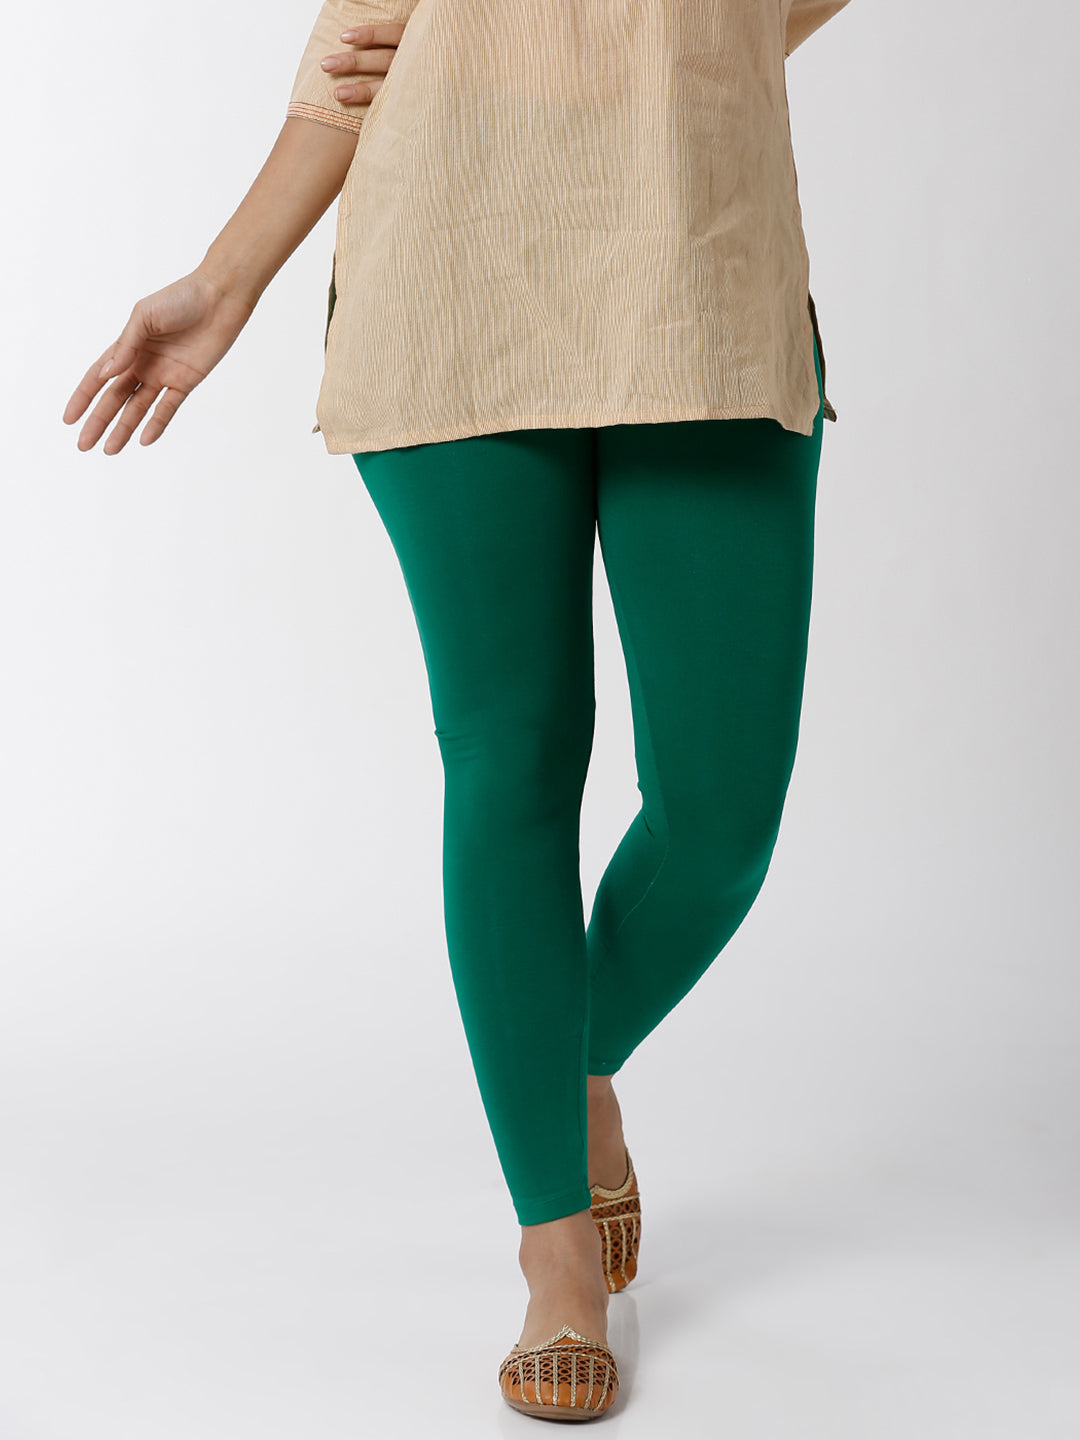 Buy Respermeldo Regular Legging Green + Ruby Drawstring Legging Dark Green  for Women | Super-High Waisted | Non-Transparent | Feather Soft Fabric | Ankle  Length Tights (Combo 1+1) - 30 at Amazon.in